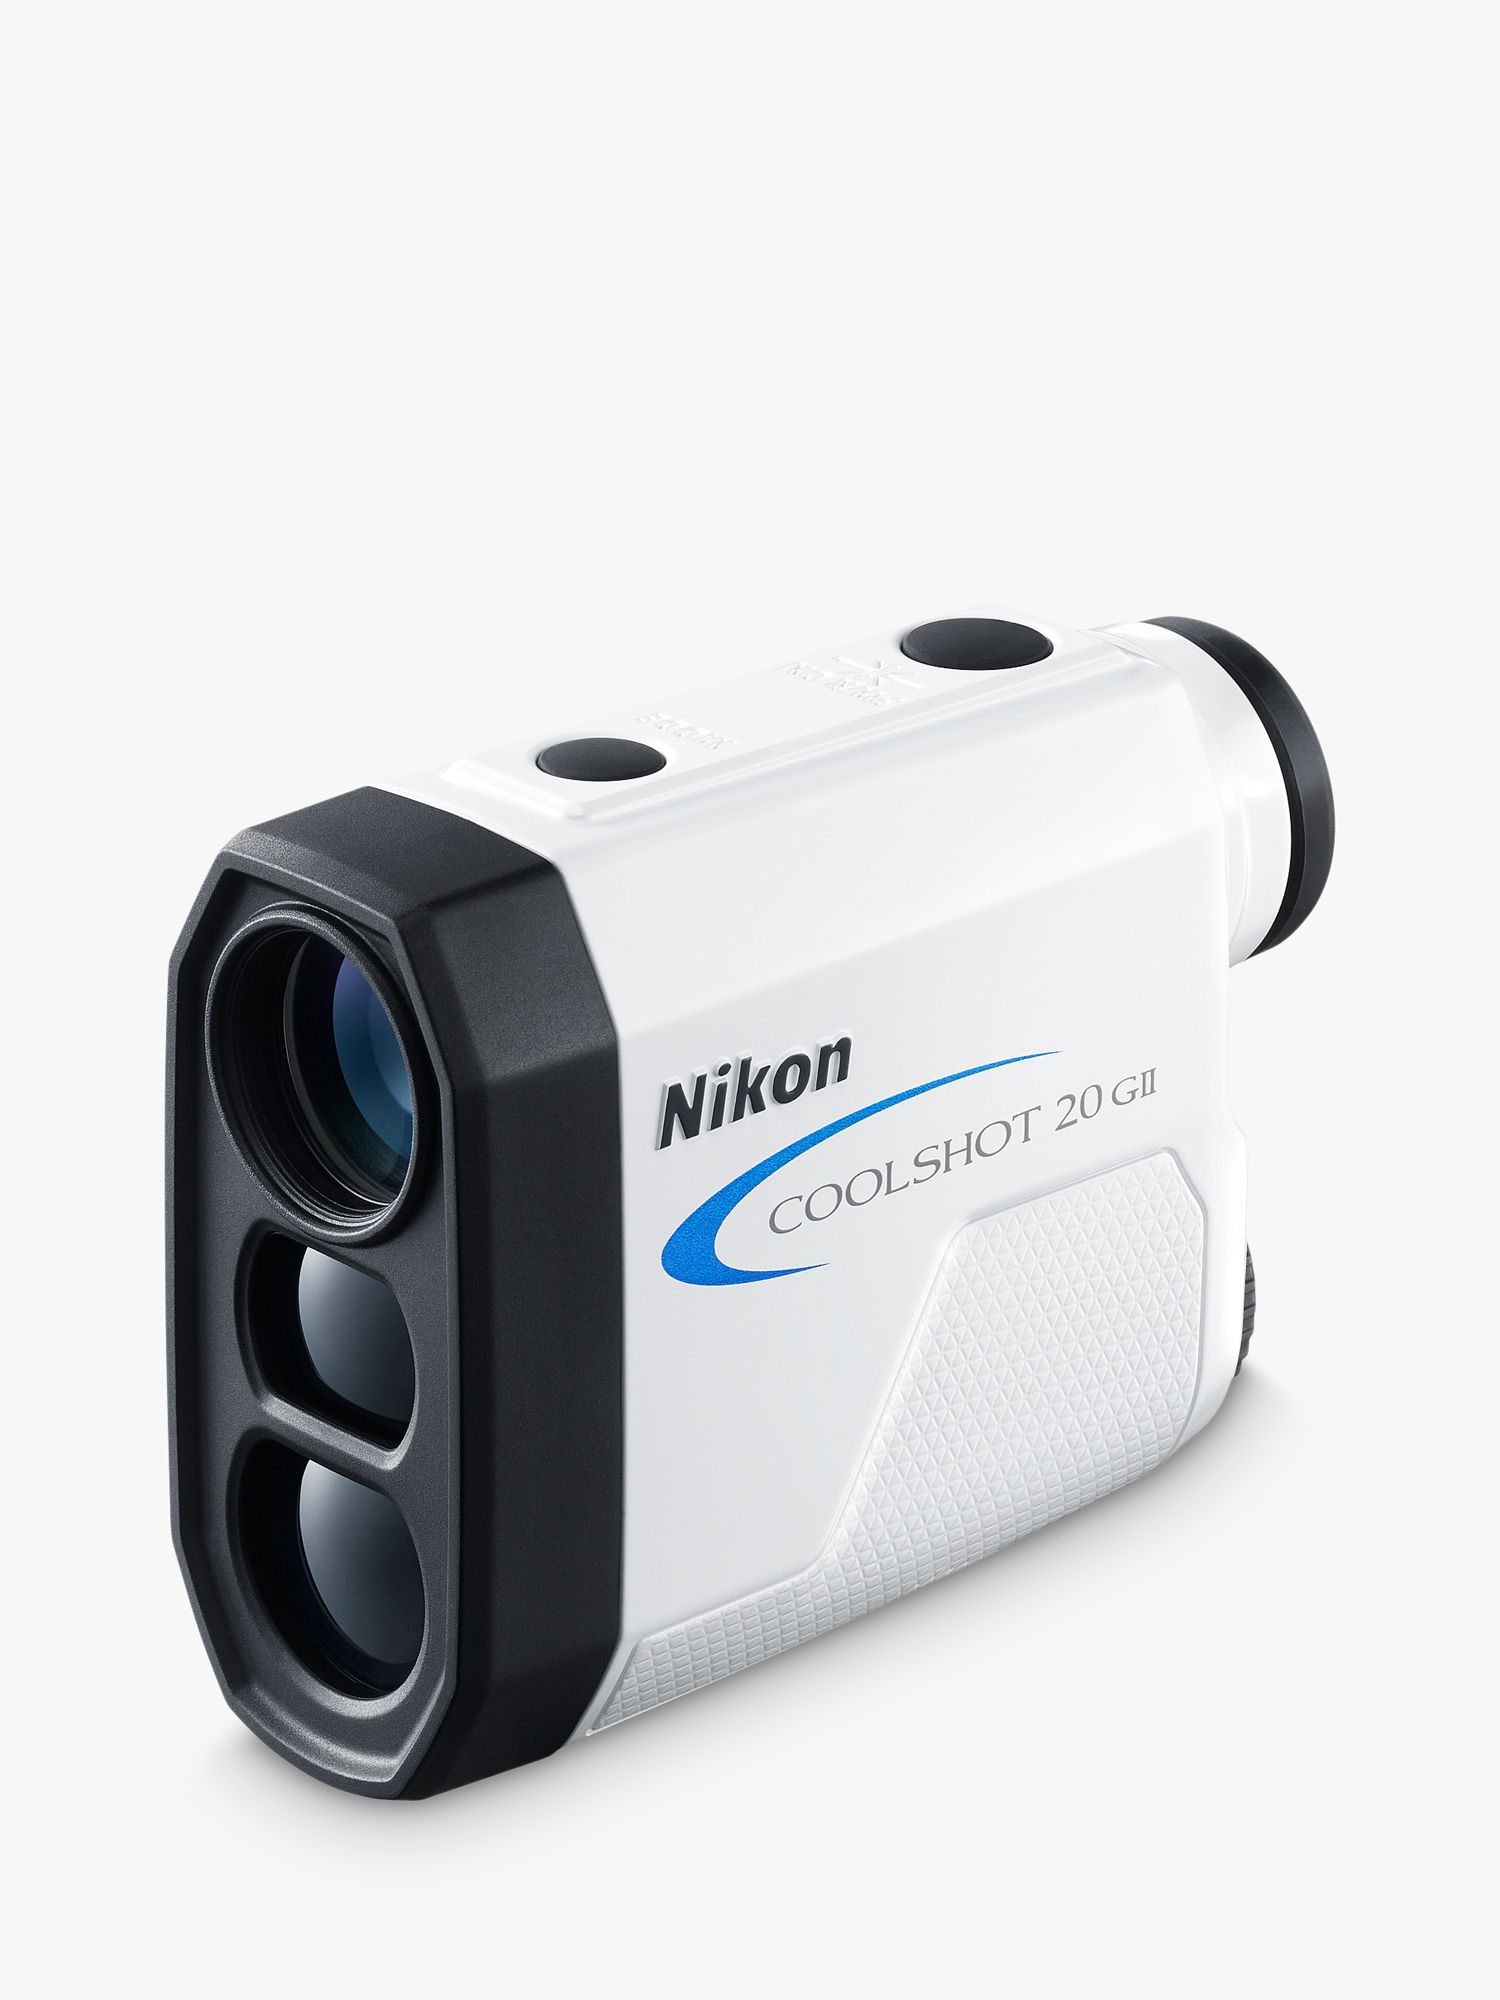 Image of Nikon COOLSHOT 20 GII Laser Range Finder with 6800 Yard Range